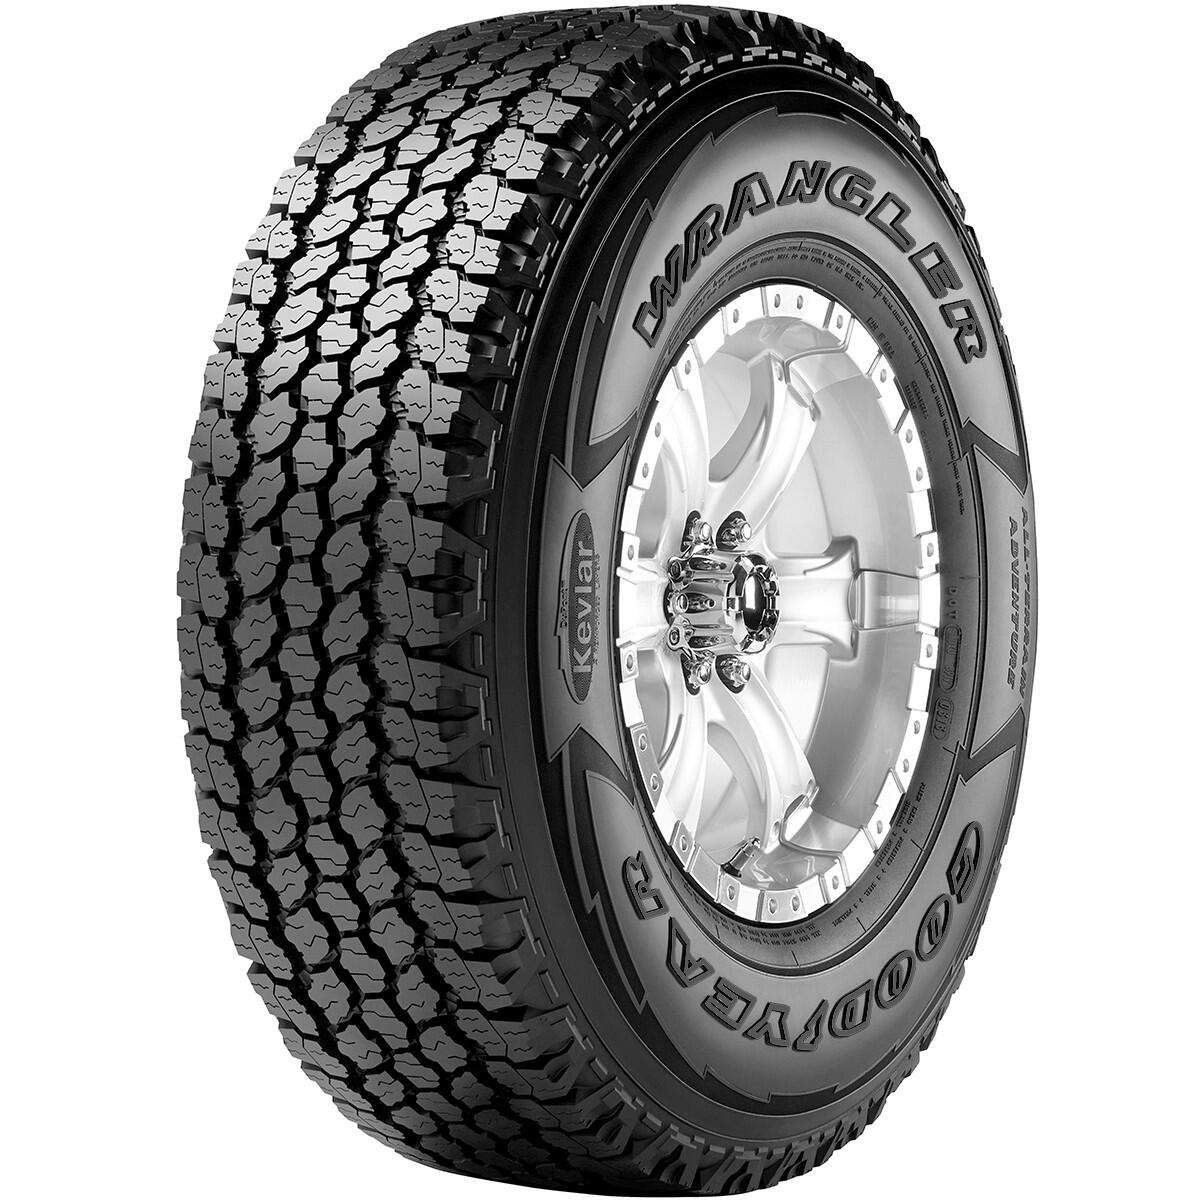 Wrangler A/T Adventure - Tyres | Hyper Drive